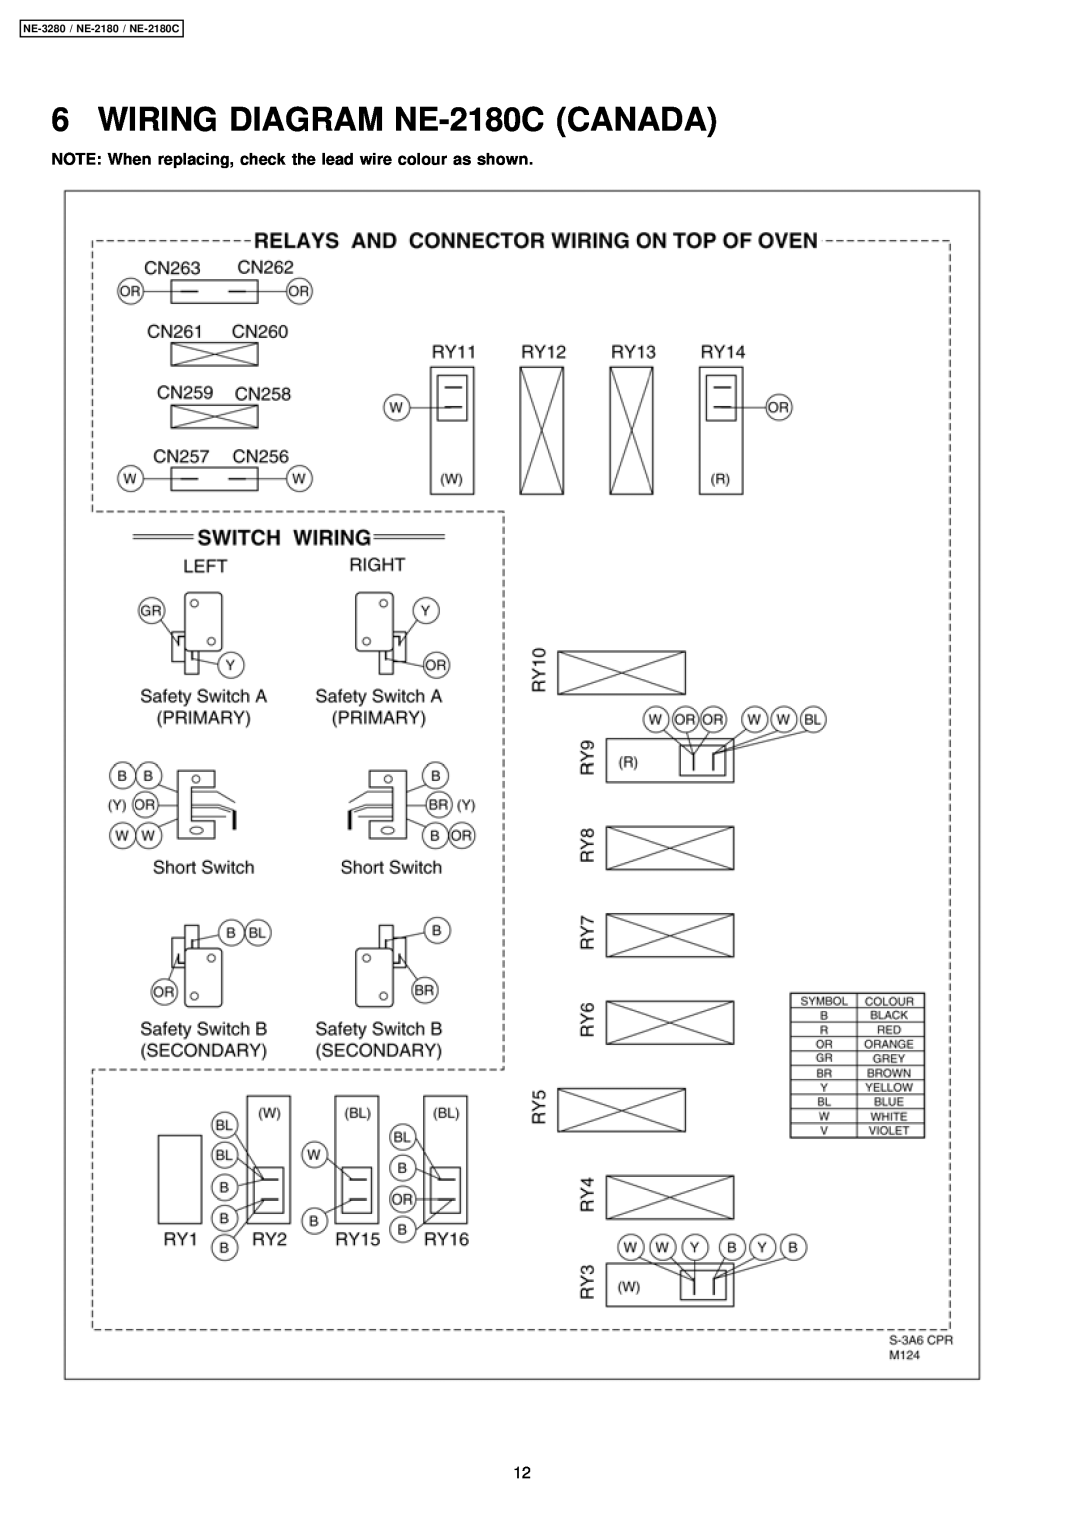 Panasonic manual WIRING DIAGRAM NE-2180CCANADA, NE-3280 / NE-2180 / NE-2180C 